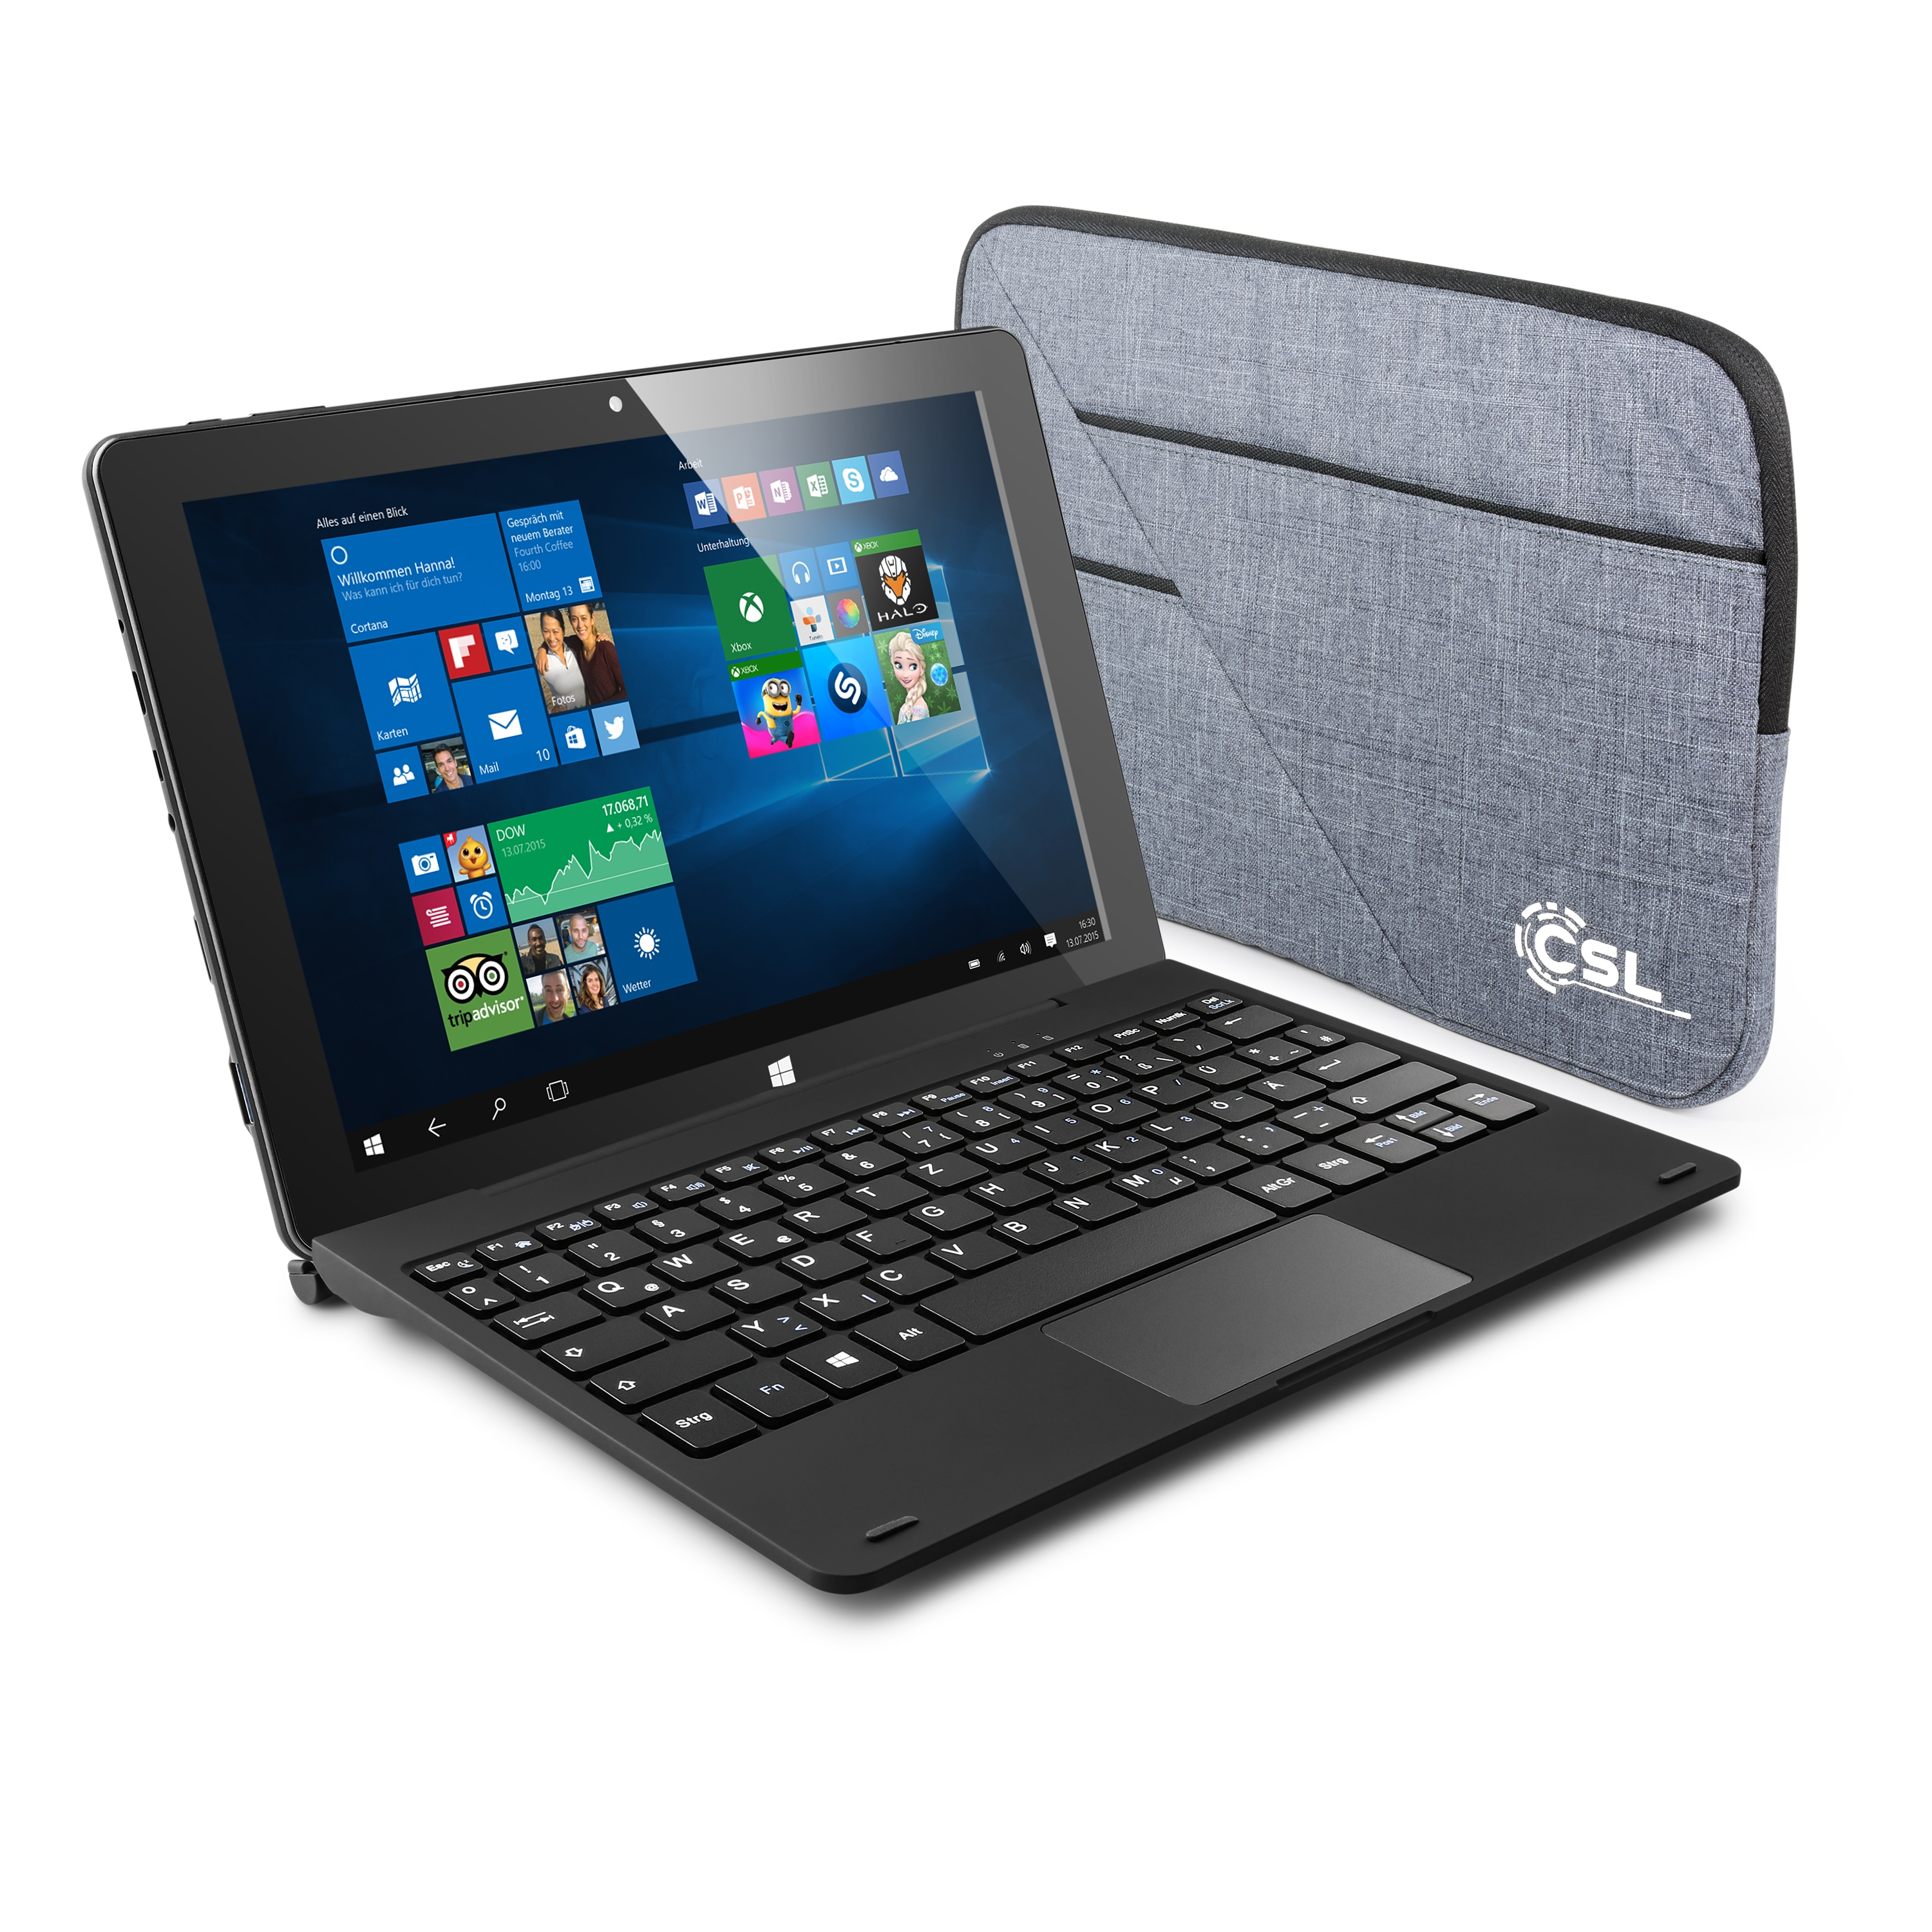 GB schwarz Panther GB, 3.1 / Tab 10,1 HD Tablet, Win USB 11 128 Zoll, + 128 CSL Tasche, /